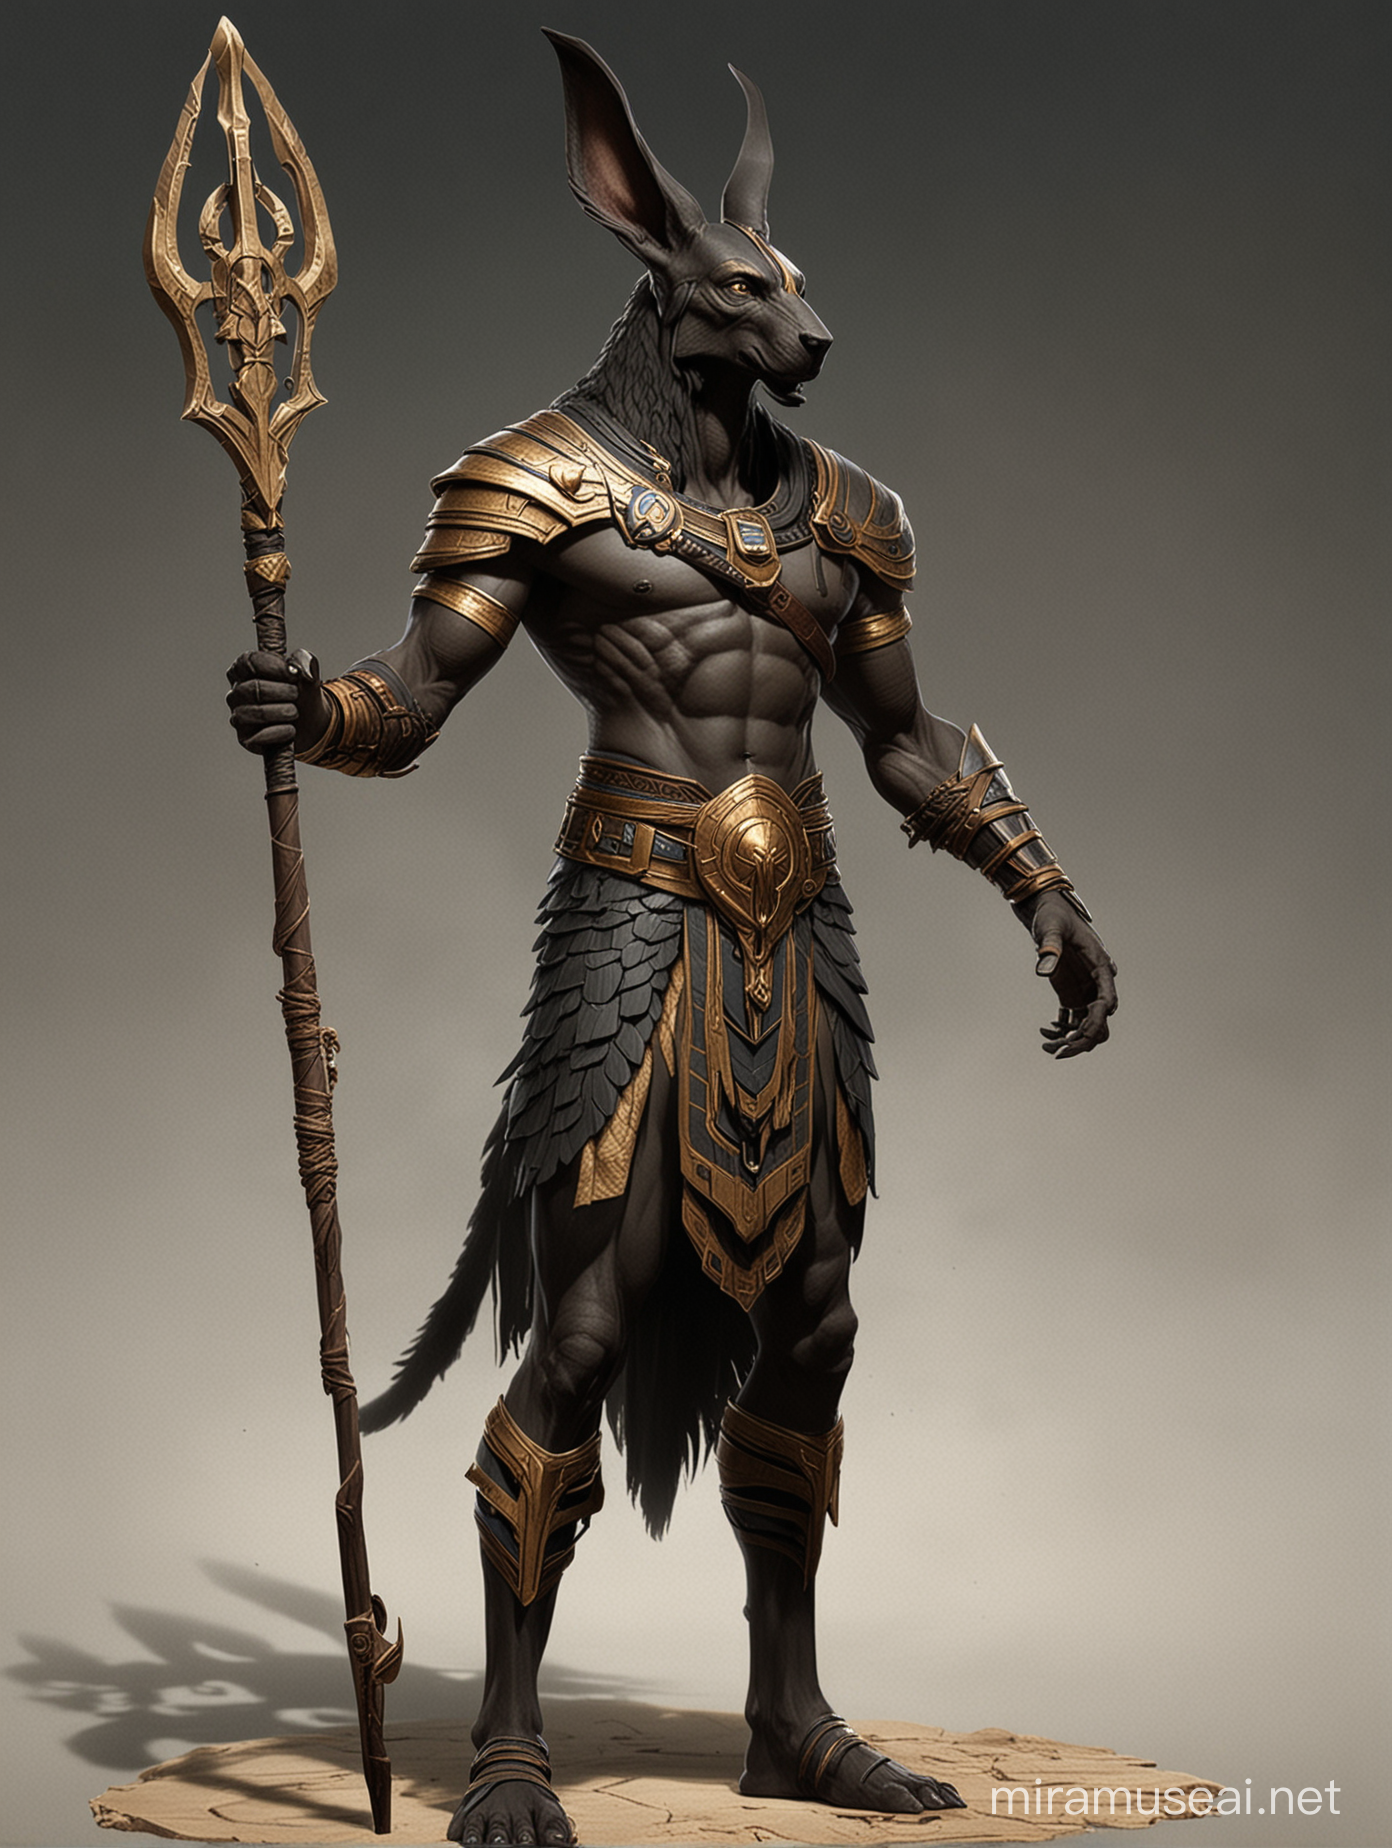 Anubis concept art for God of War game